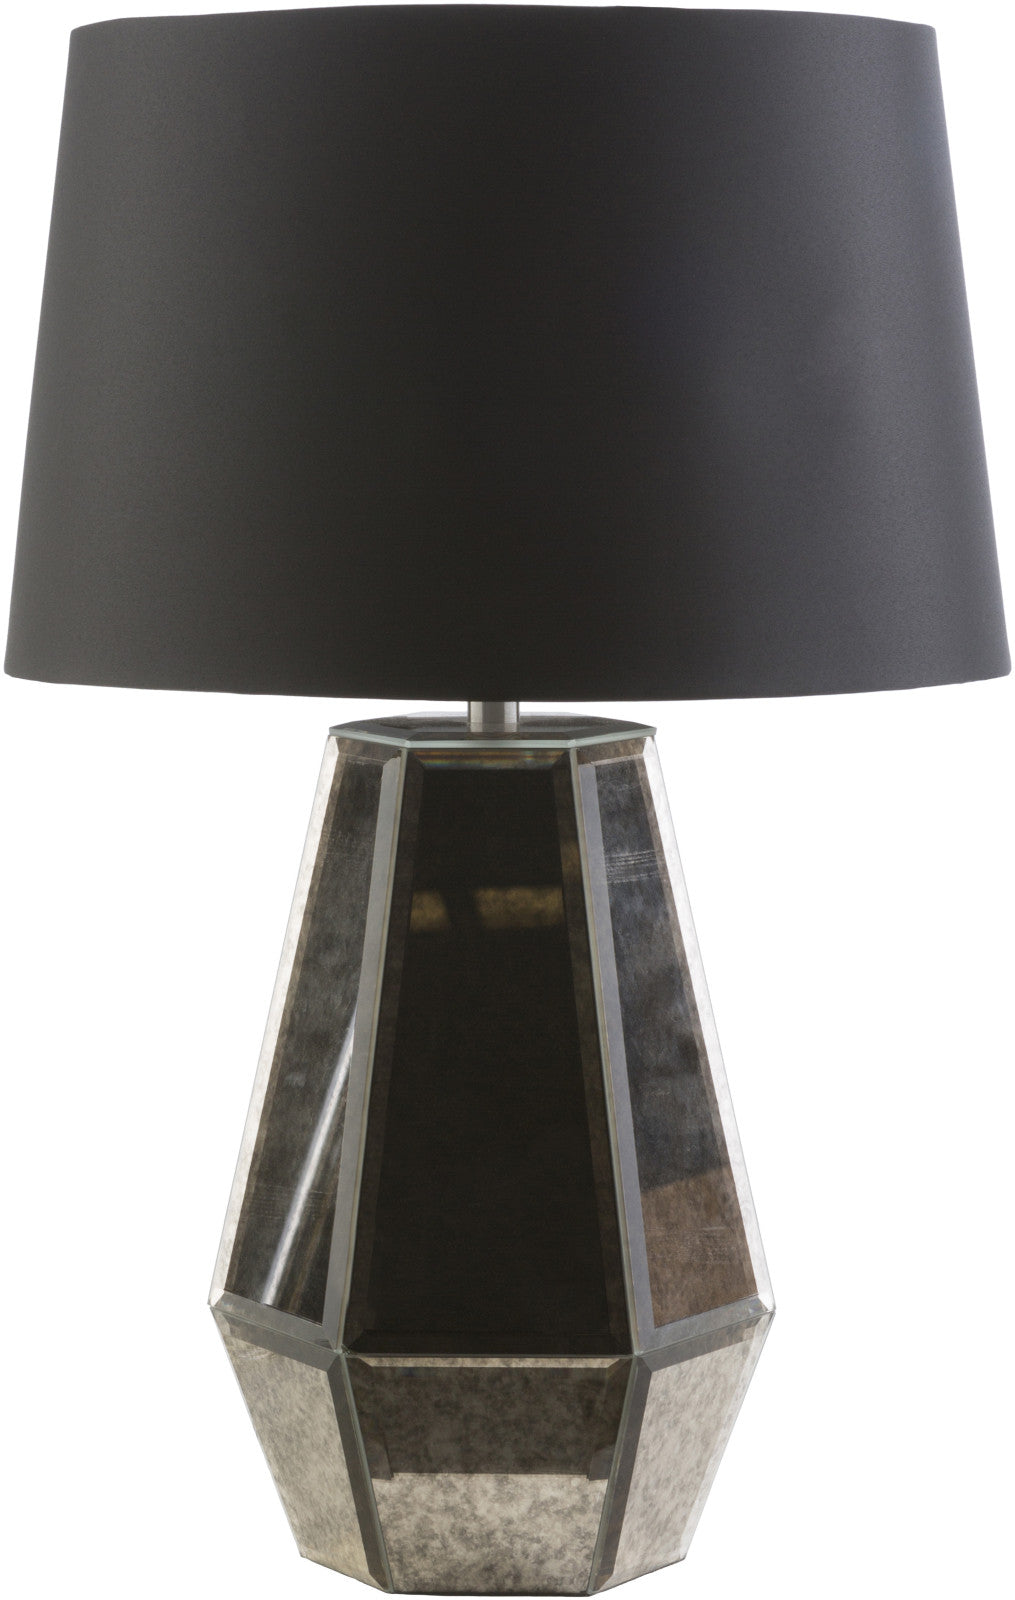 Surya Ryden RYD-458 Black Lamp Table Lamp